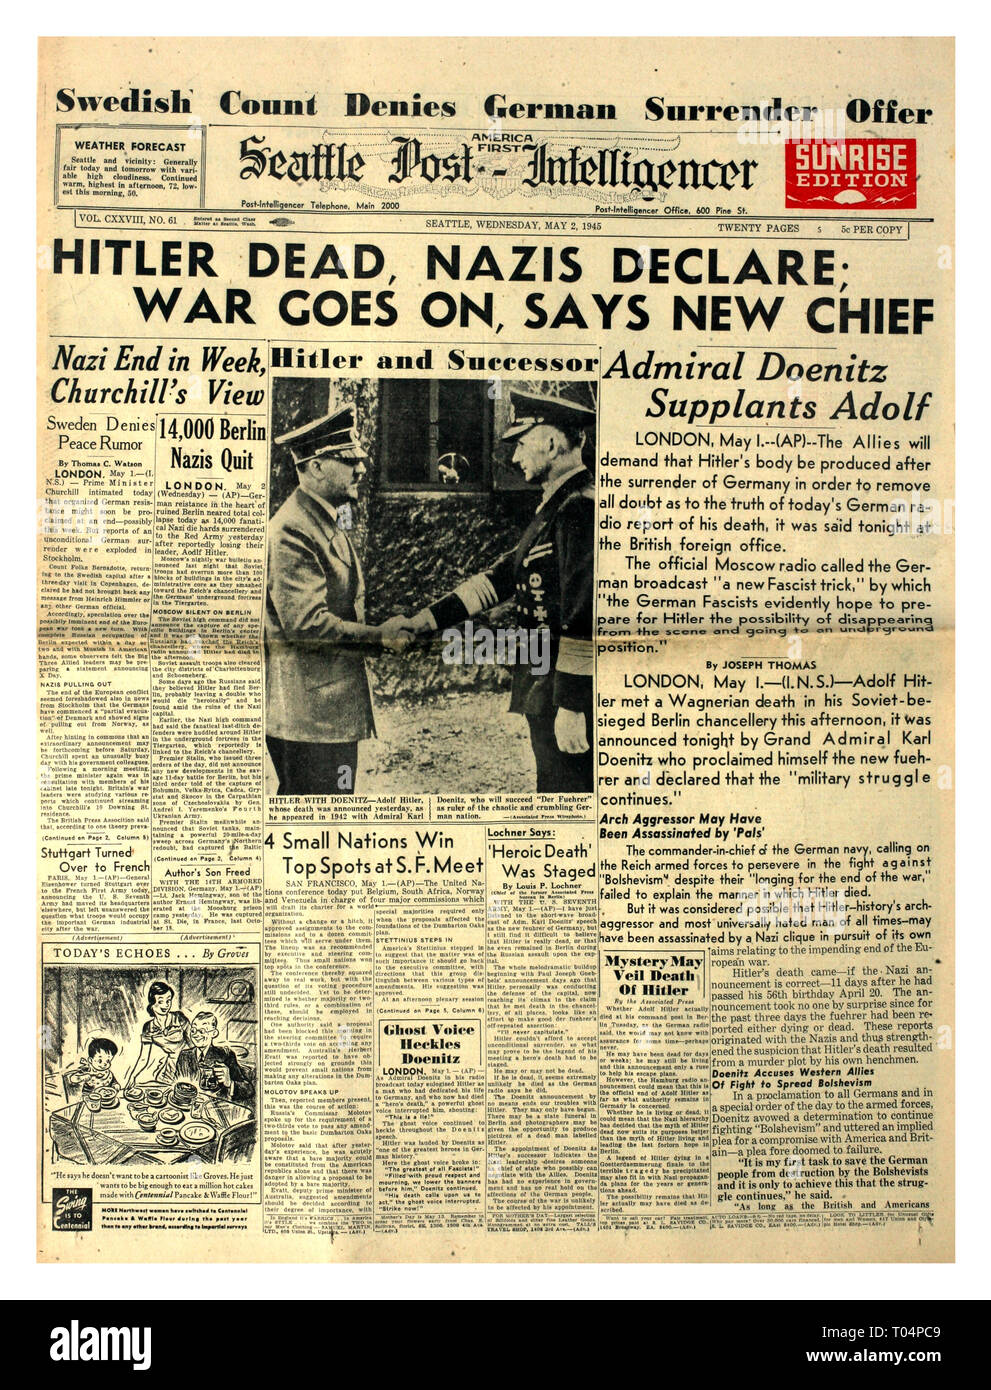 'HITLER DEAD NAZIS DECLARE WAR GOES ON' May 2nd 1945 Seattle Post (America First) Intelligencer newspaper headline WW2 Hitler shown shaking hands with his successor Admiral Doenitz World War II Stock Photo